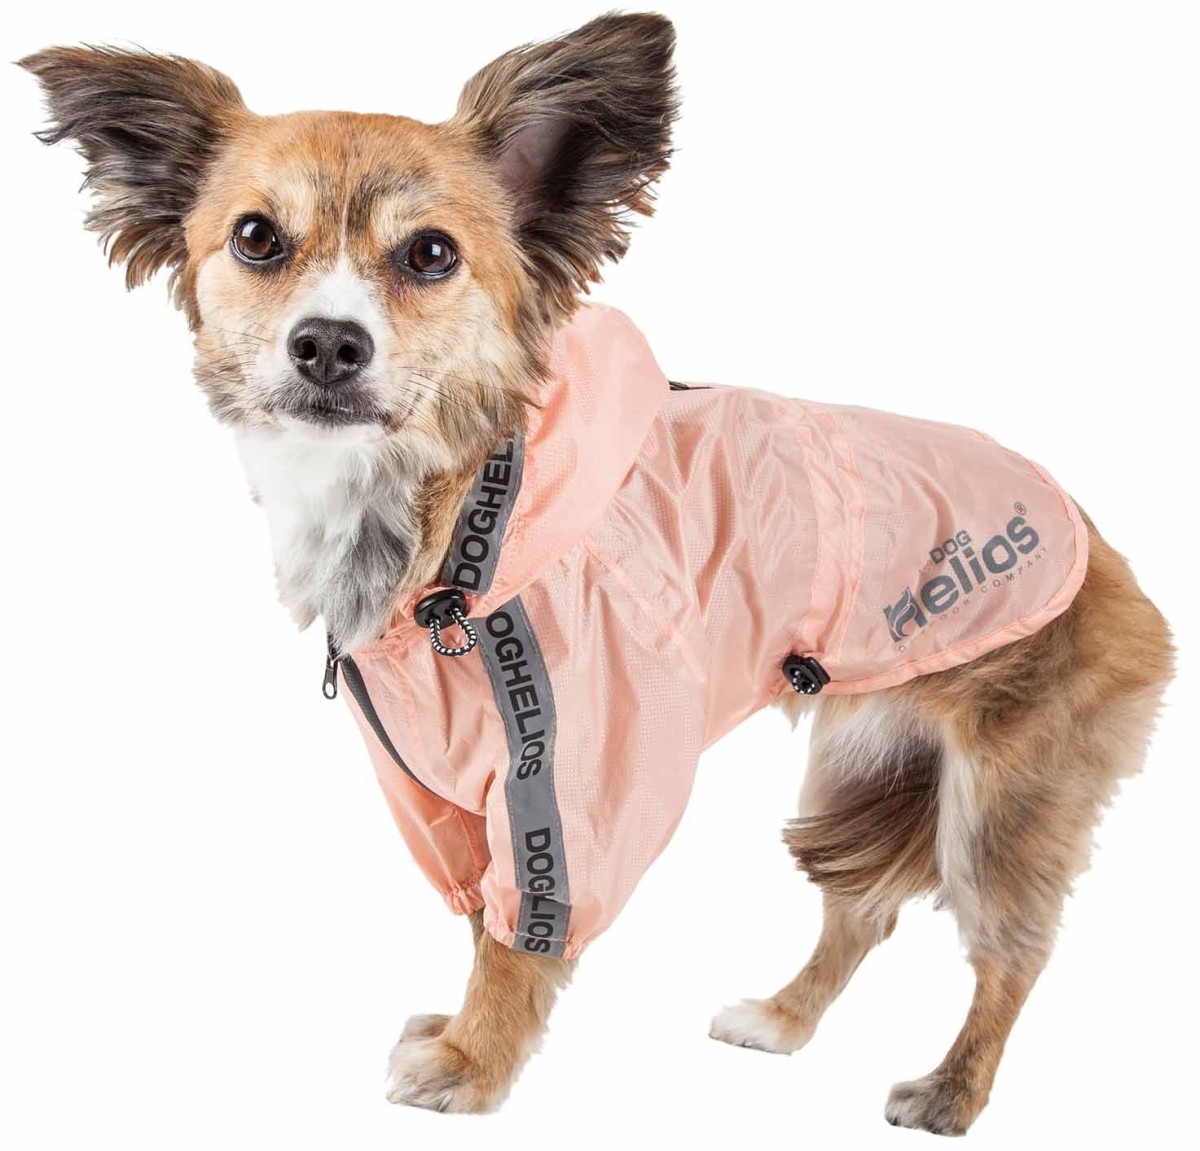 R9pcsm Torrential Shield Waterproof Multi-adjustable Pet Dog Windbreaker Raincoat - Peach, Small